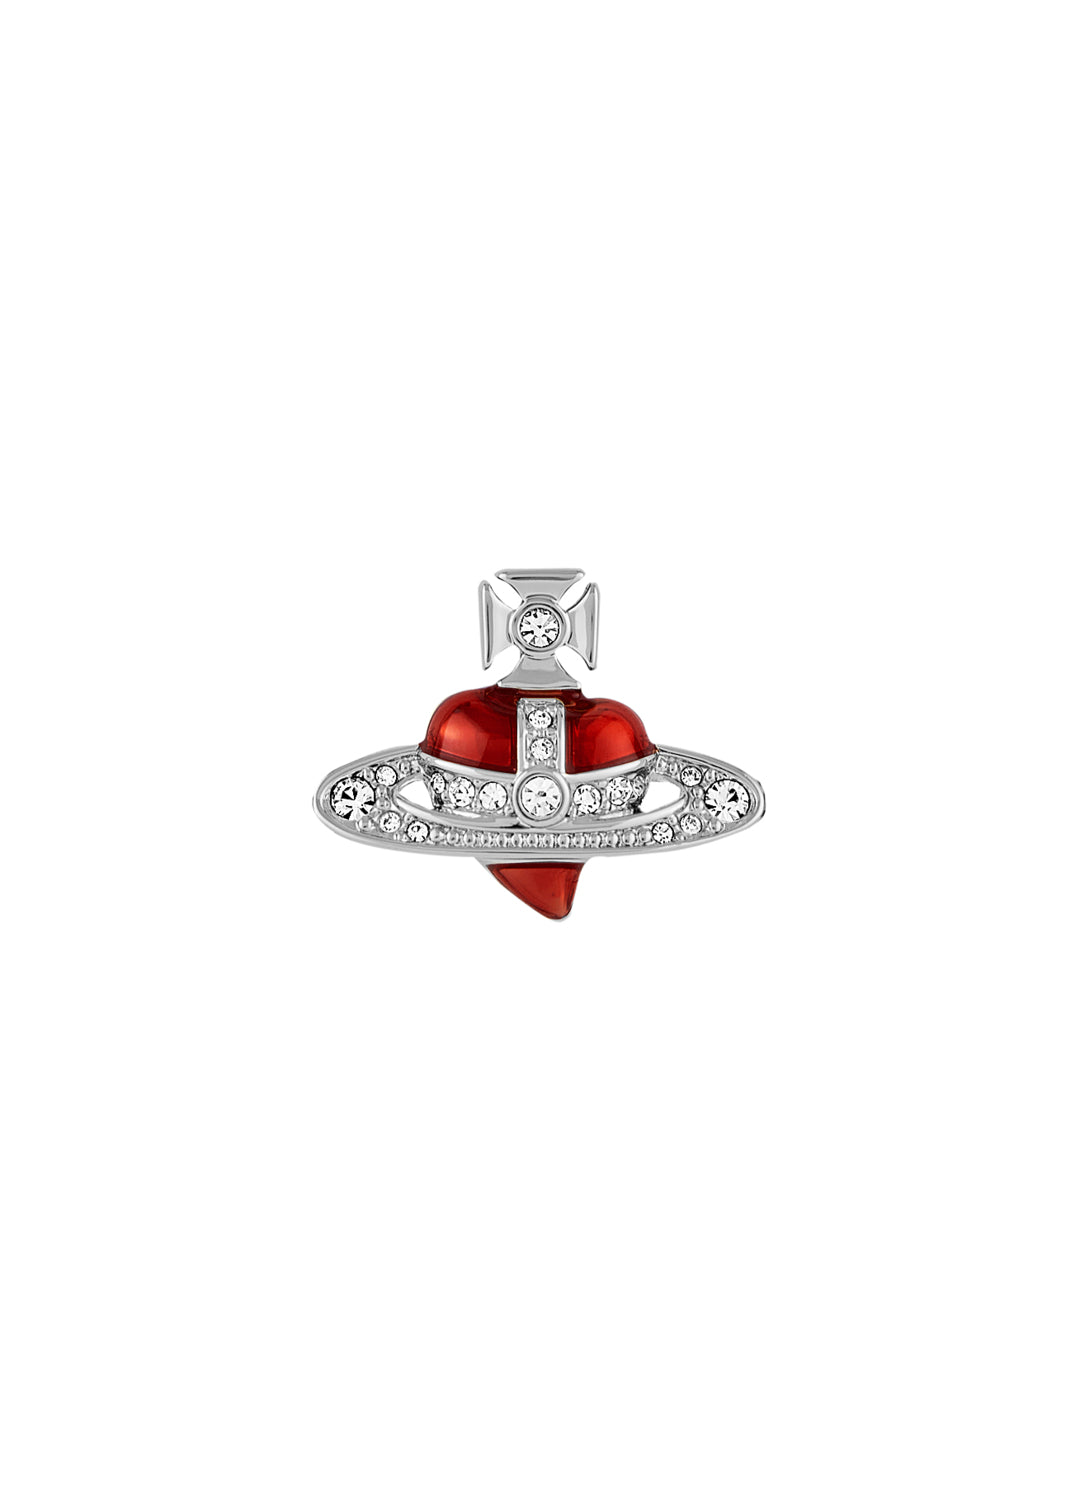 New Diamante Heart Clutch Pin - Silver/Pink -65020016-02P383-CN